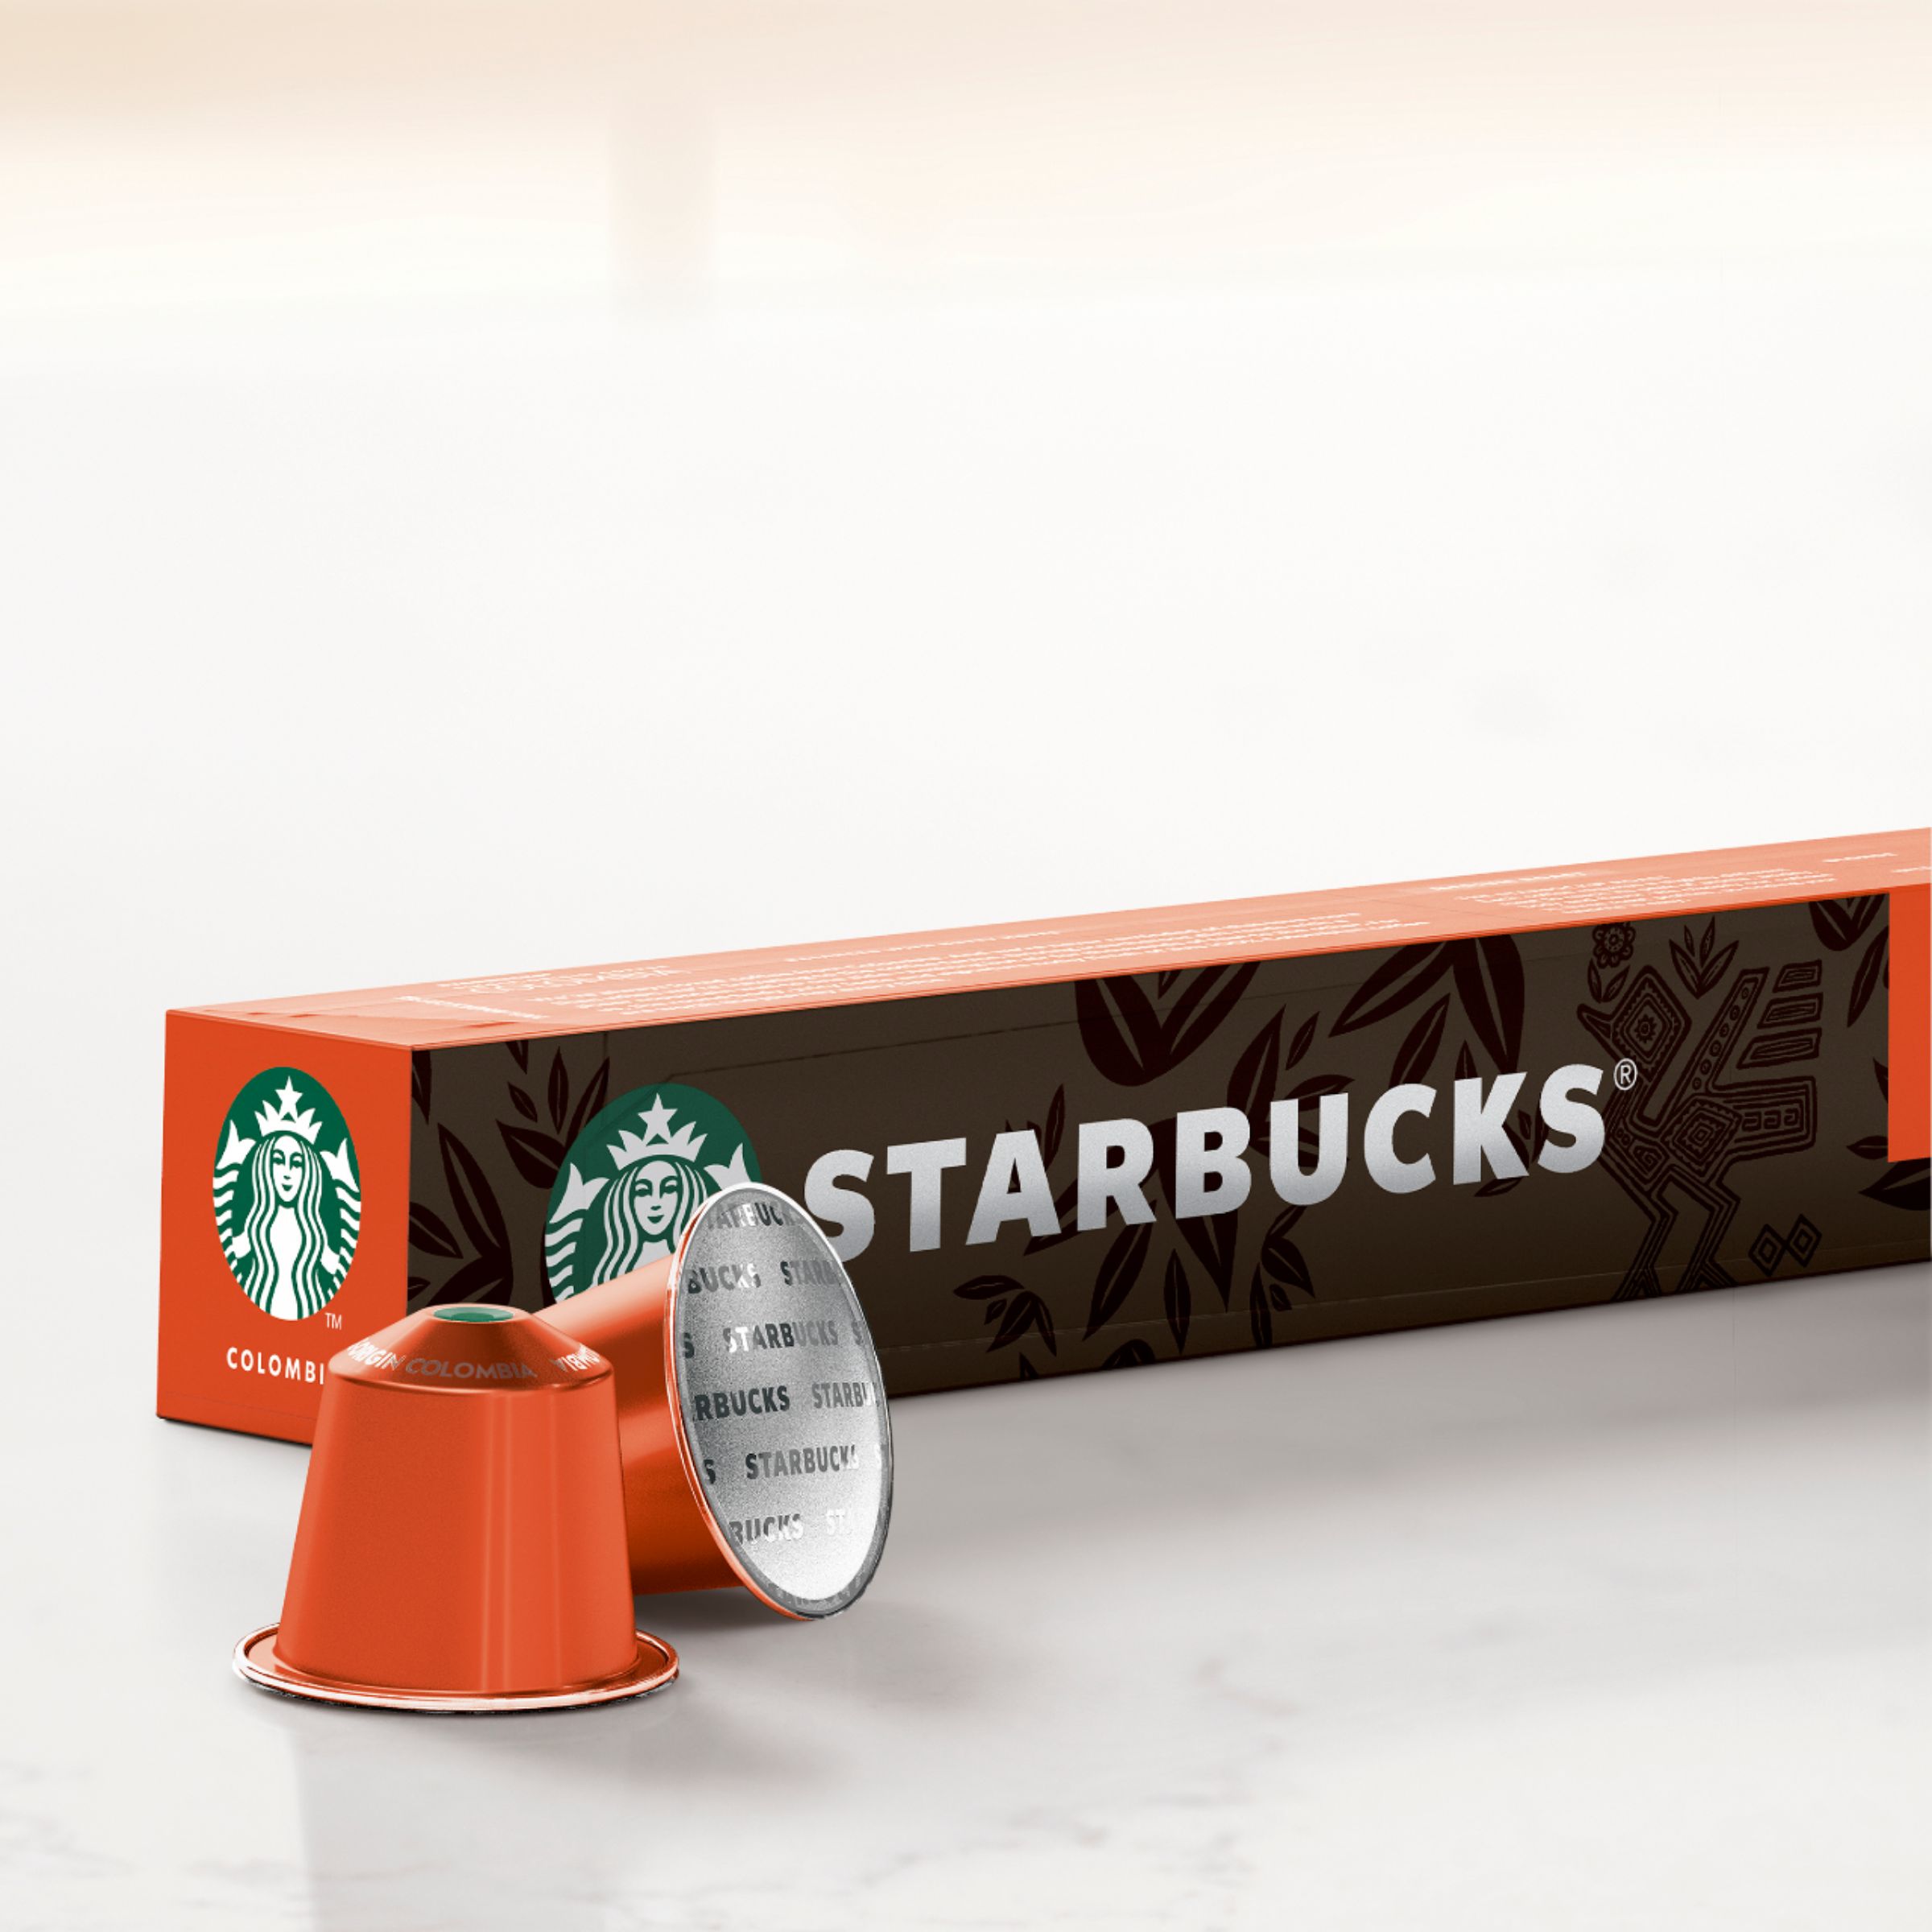 Starbucks Nespresso Colombia Coffee Pods (30-Pack) 110482 - Best Buy